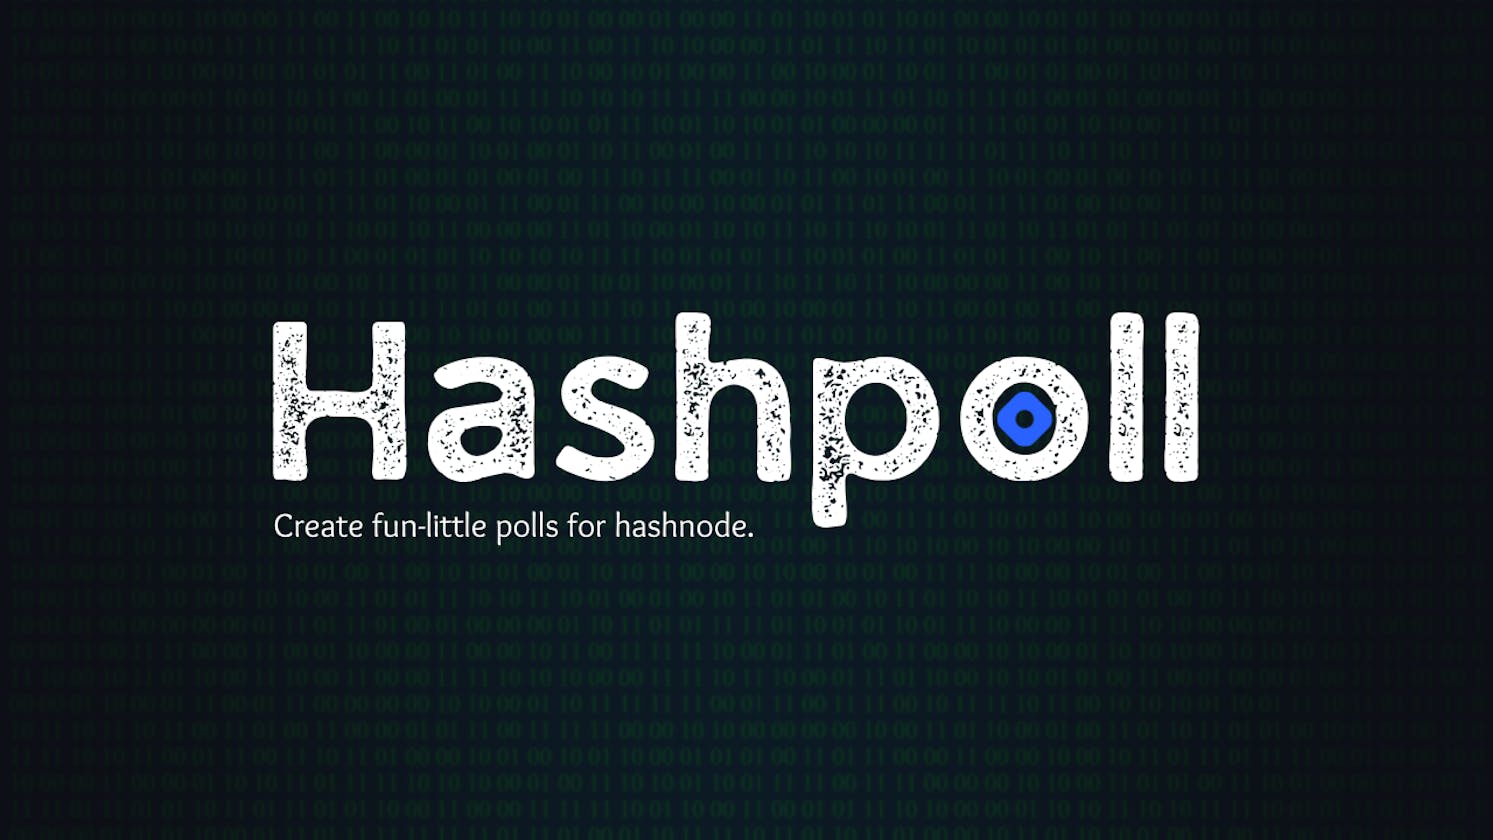 Introducing (*insert drumrolls) HashPoll